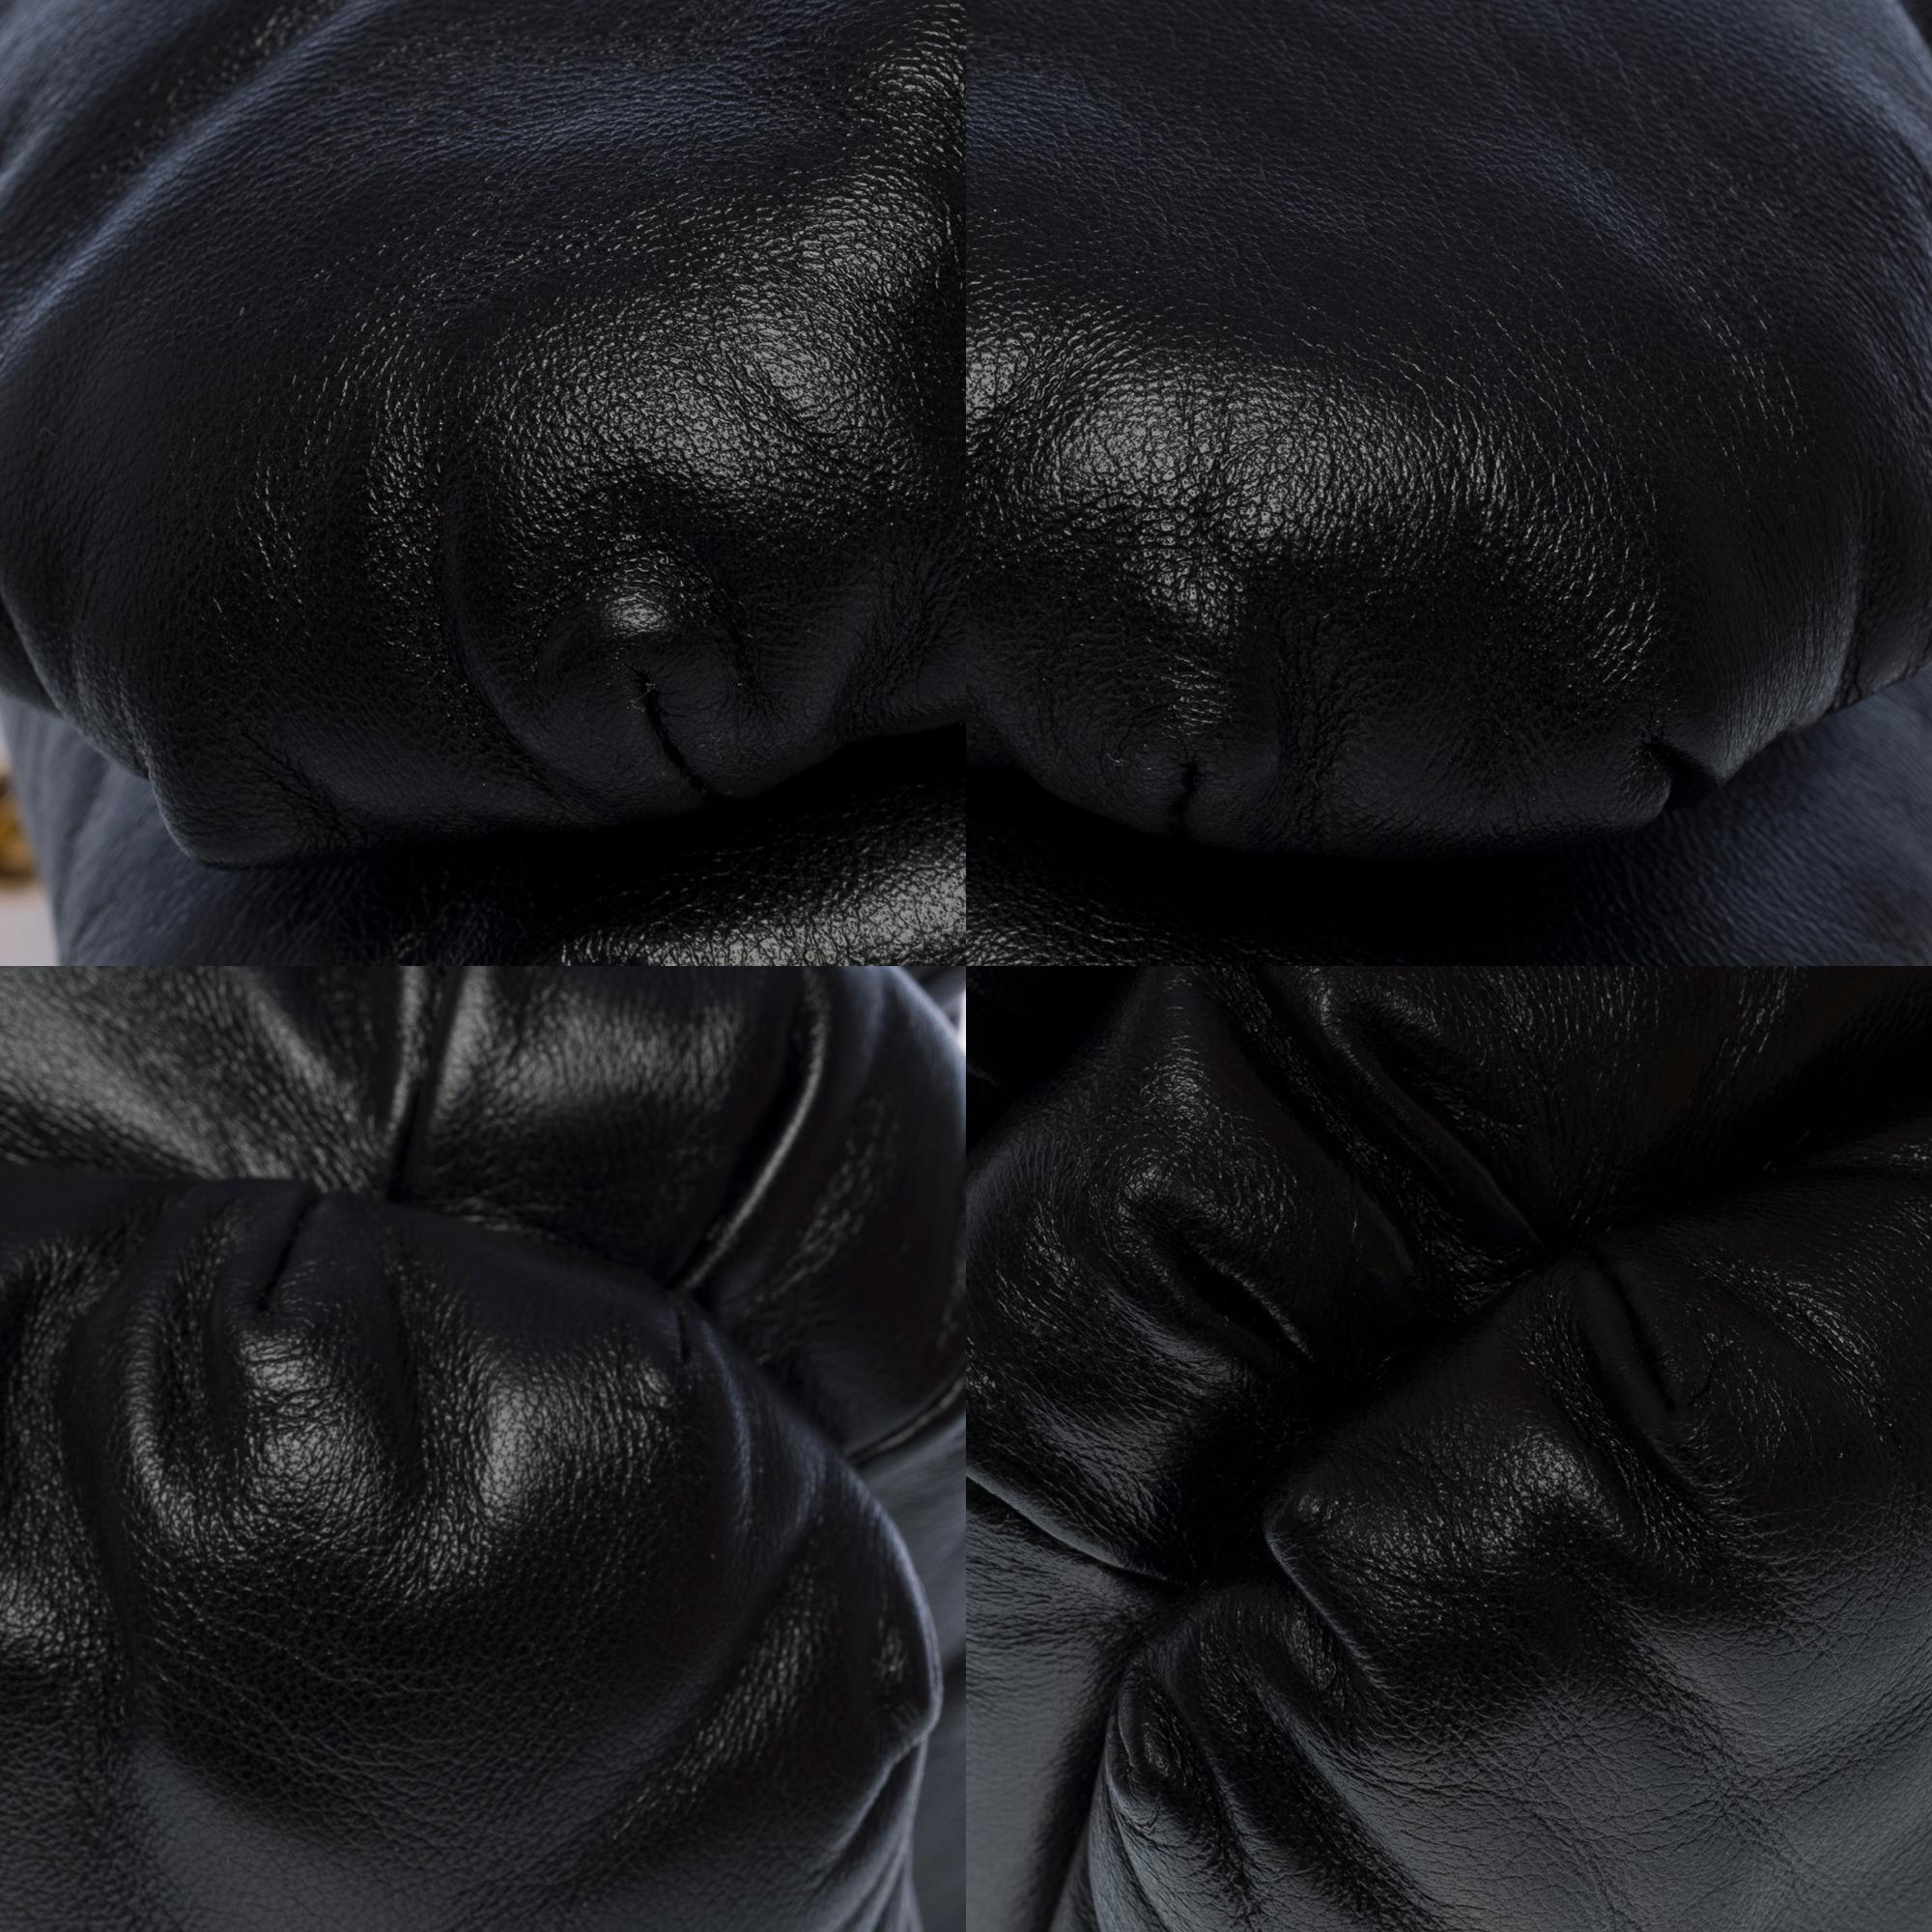 New Loewe Goya Puffer shoulder bag in black shiny lambskin leather, GHW 5